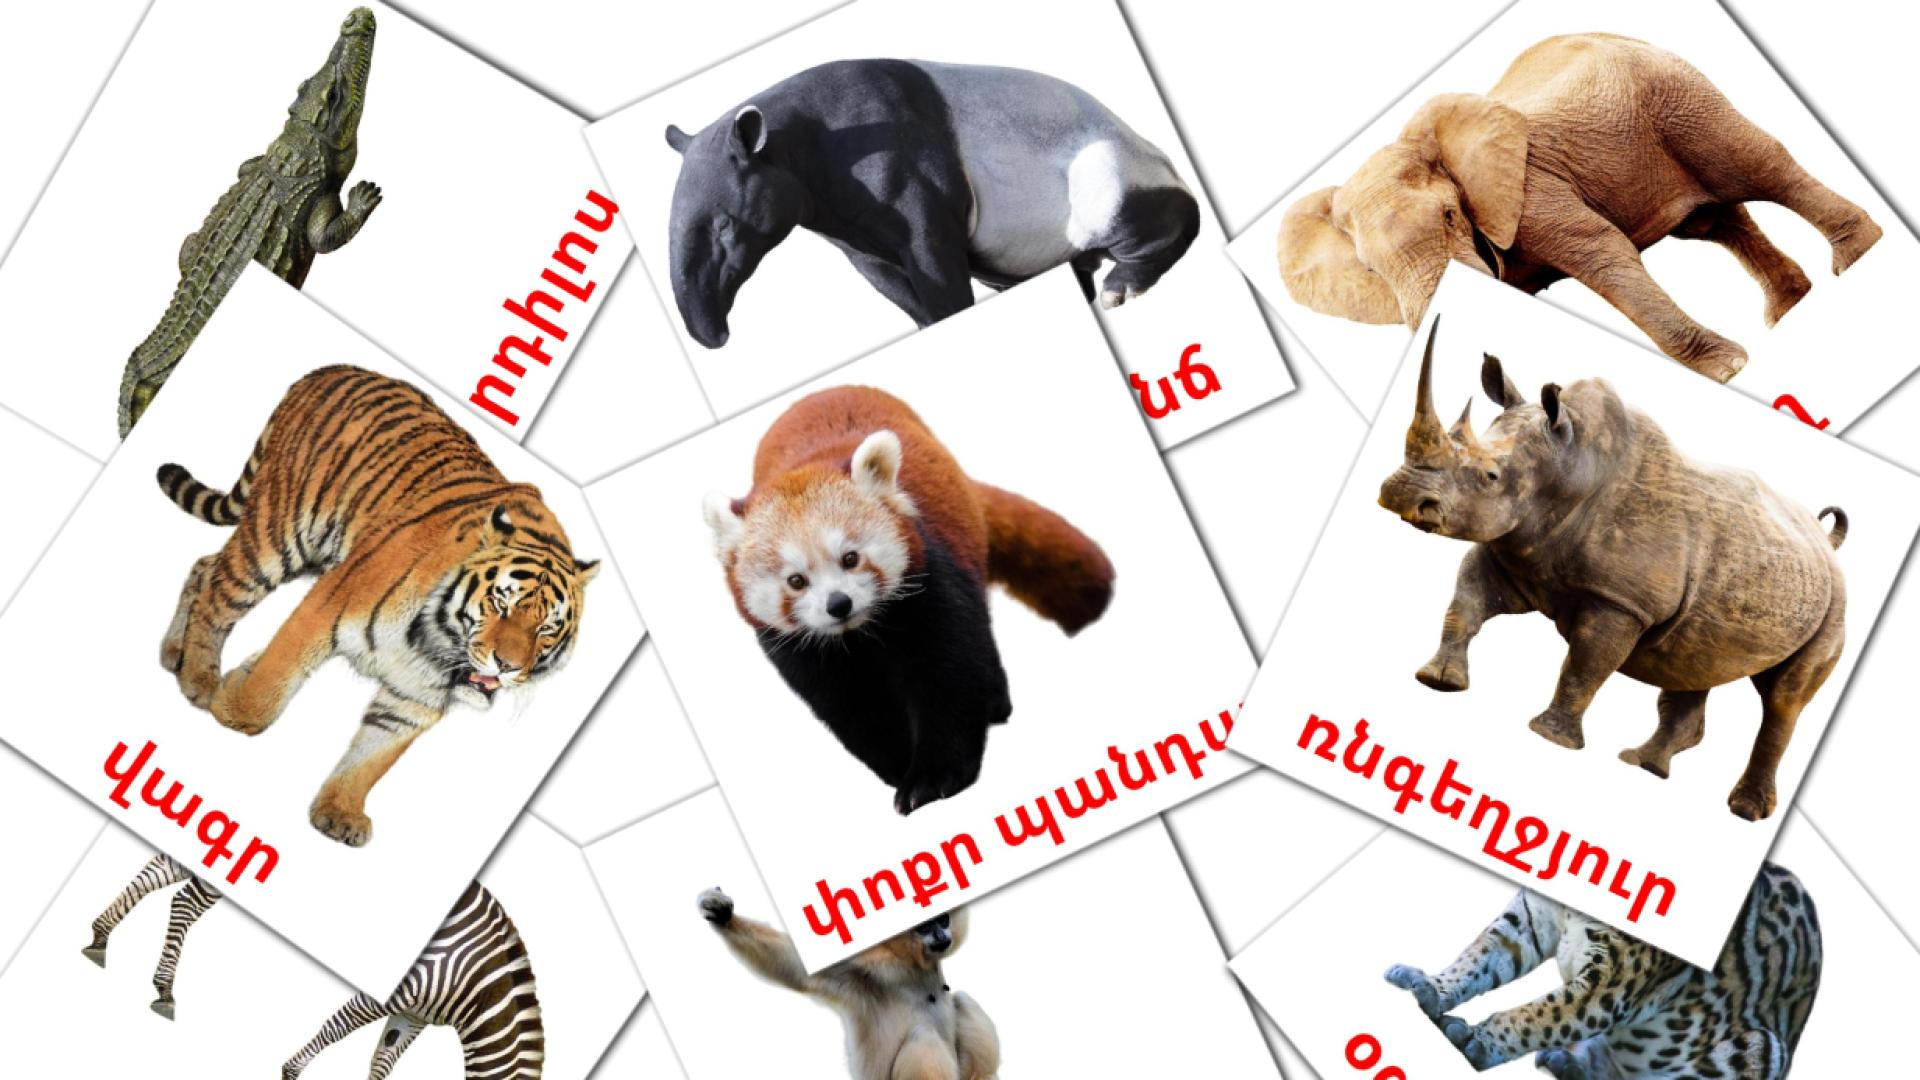 Jungle animals - armenian vocabulary cards